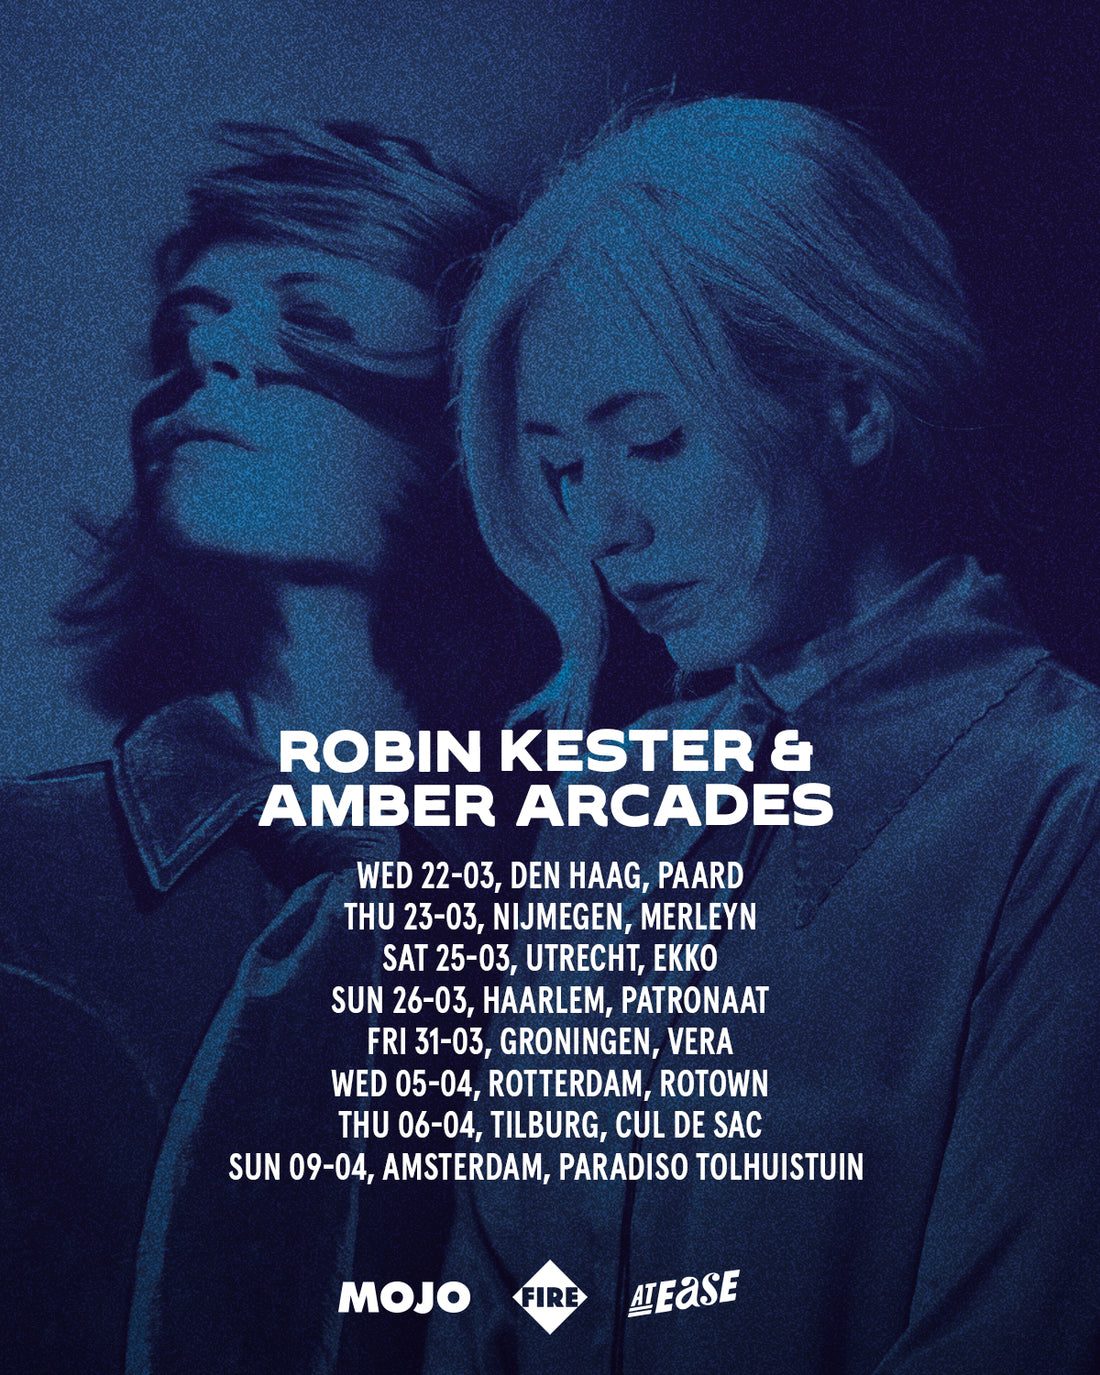 Robin Kester announces debut album and co-headline tour with Amber Arcades, shares new single Celeste